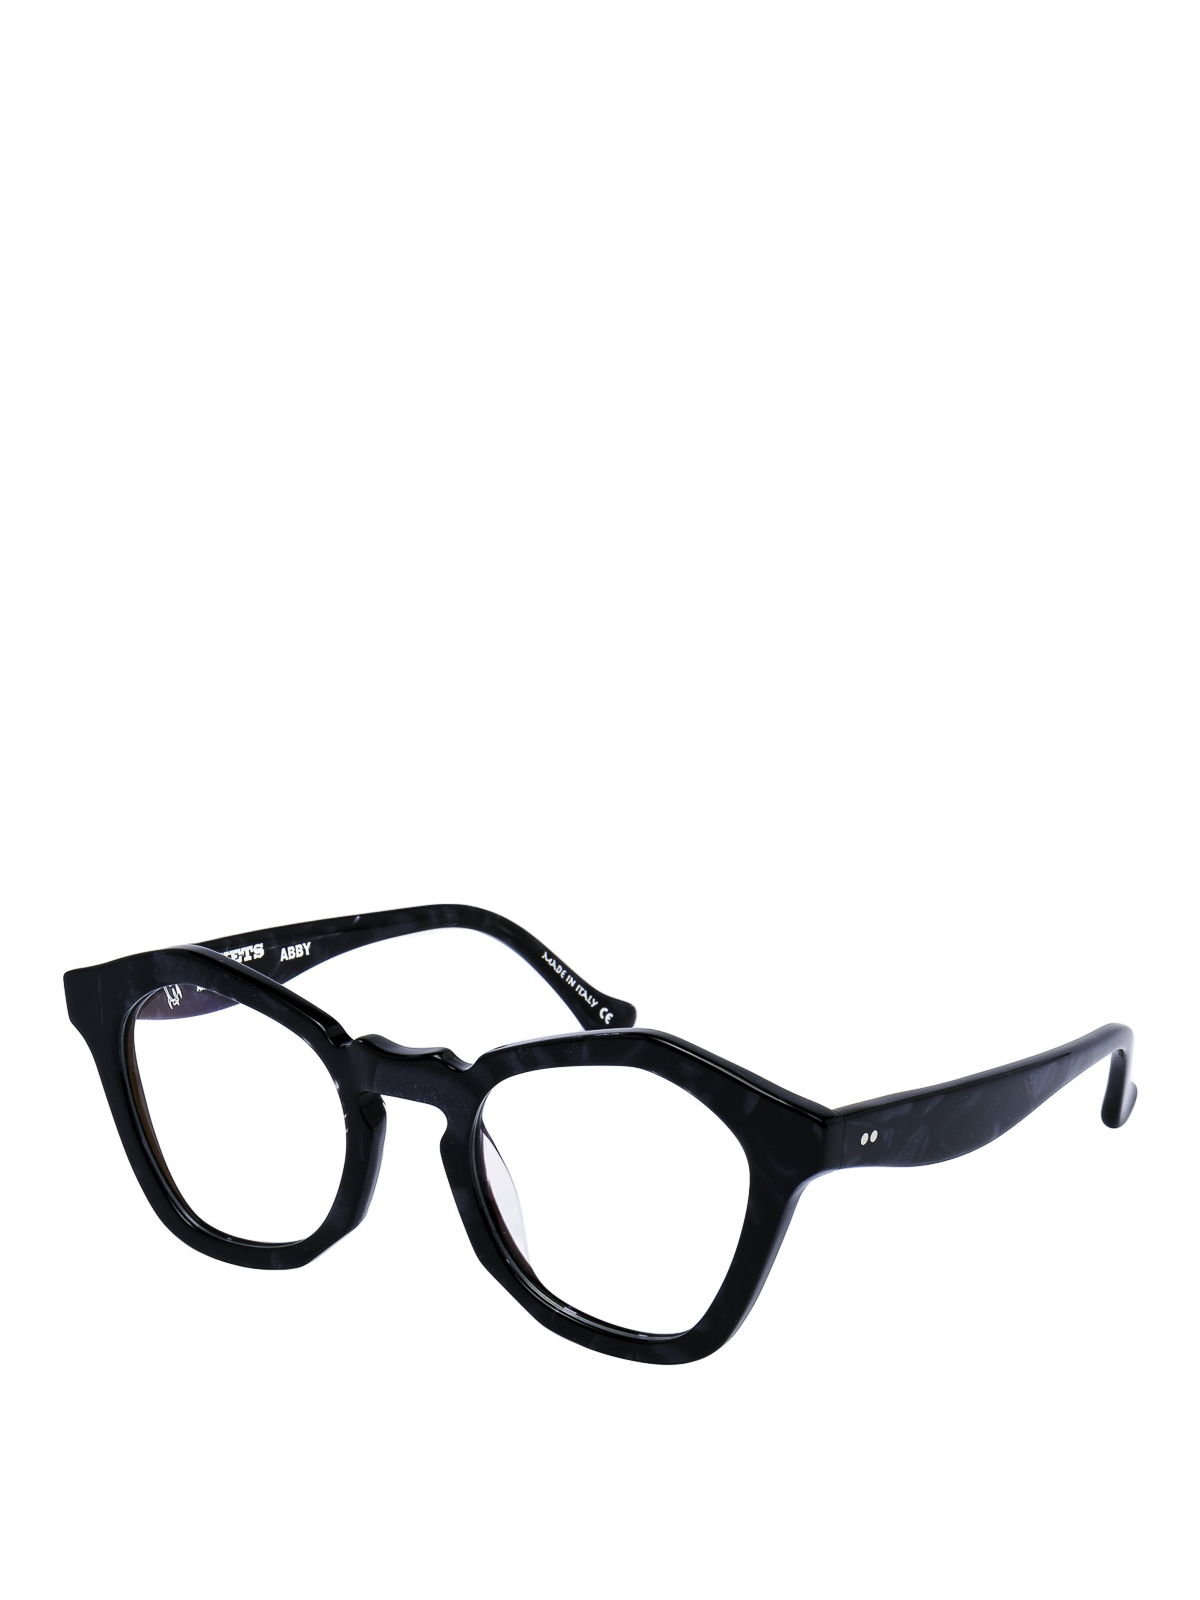 Glasses Platoy - Abby black granite acetate eyeglasses ...